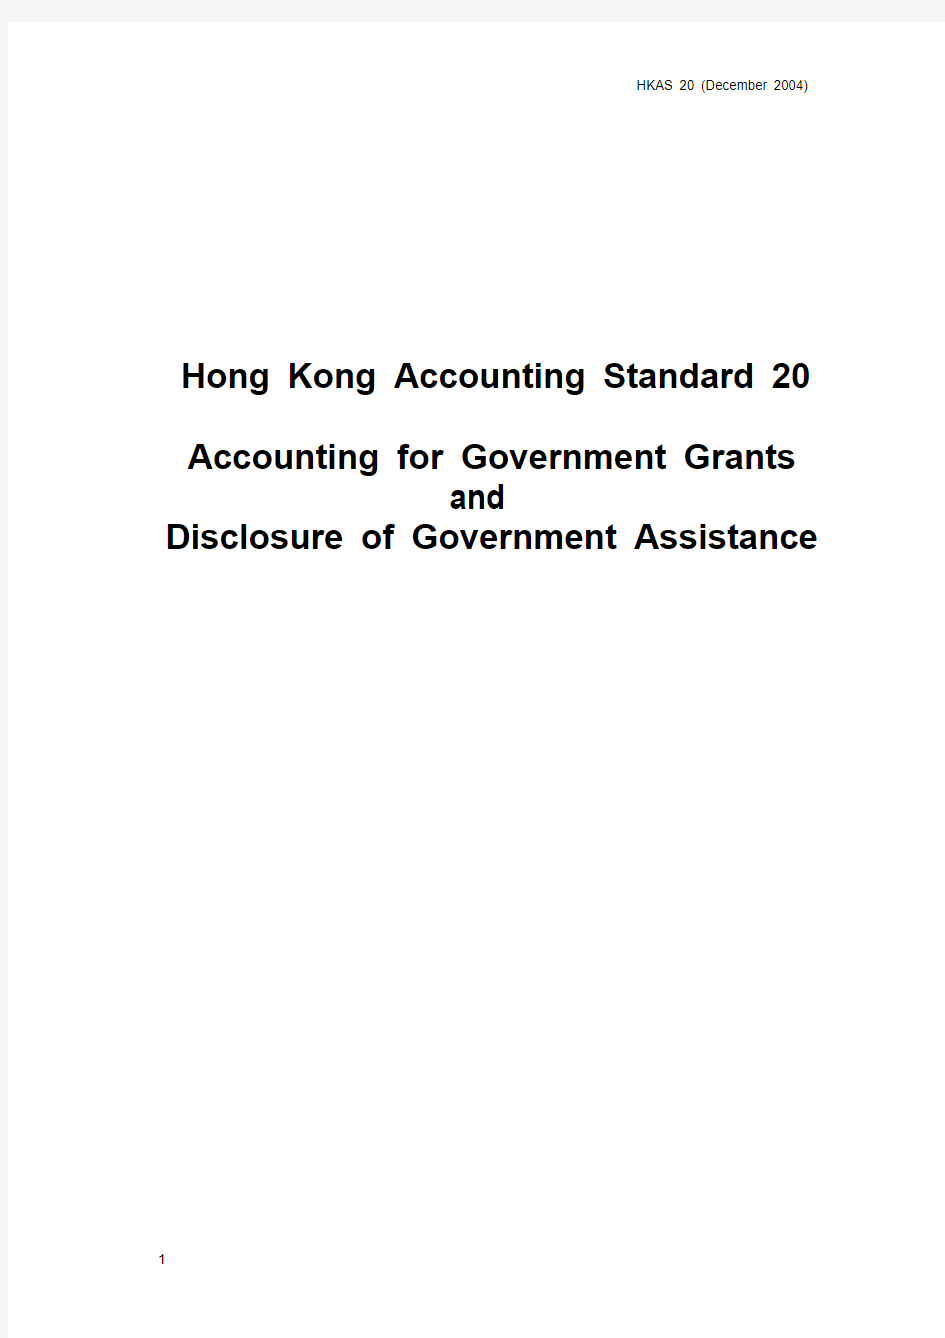 hkas20 government grant